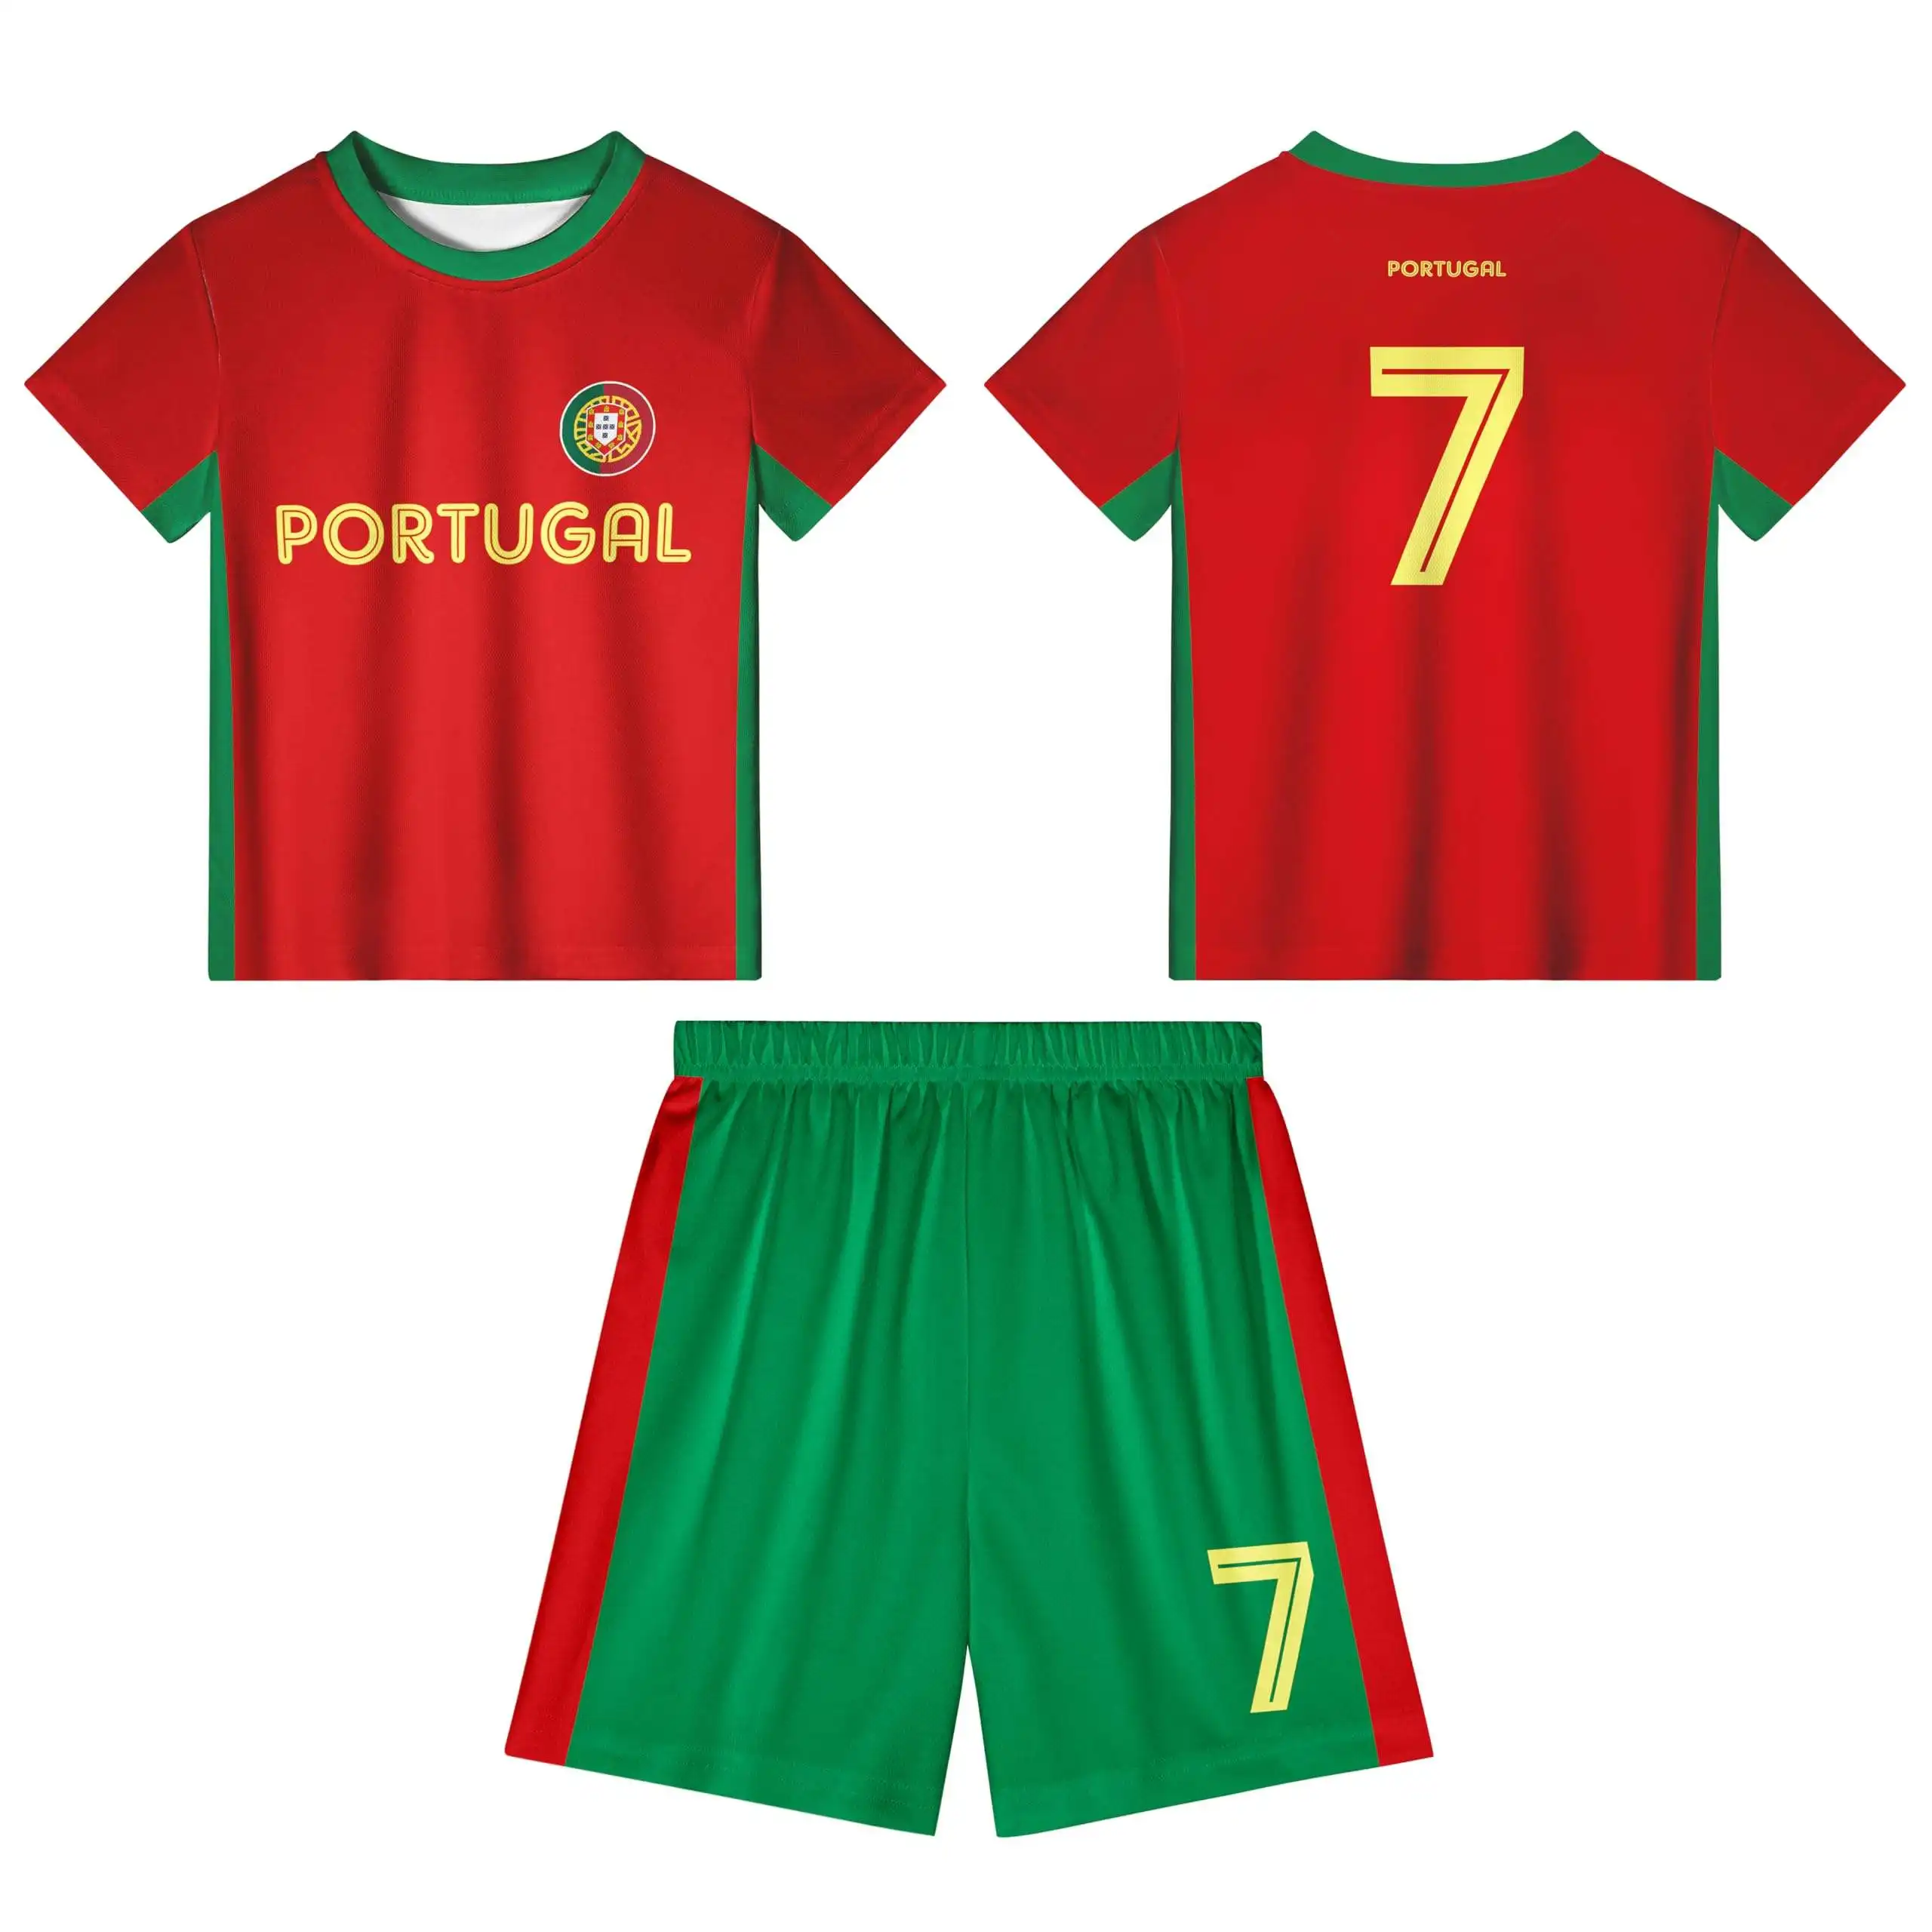 Print On Demand Portugal Trainingspak Sportpak Groothandelsprijs Kind Jeugd Comfort Ademend Voetbal Jersey Uniform Hot